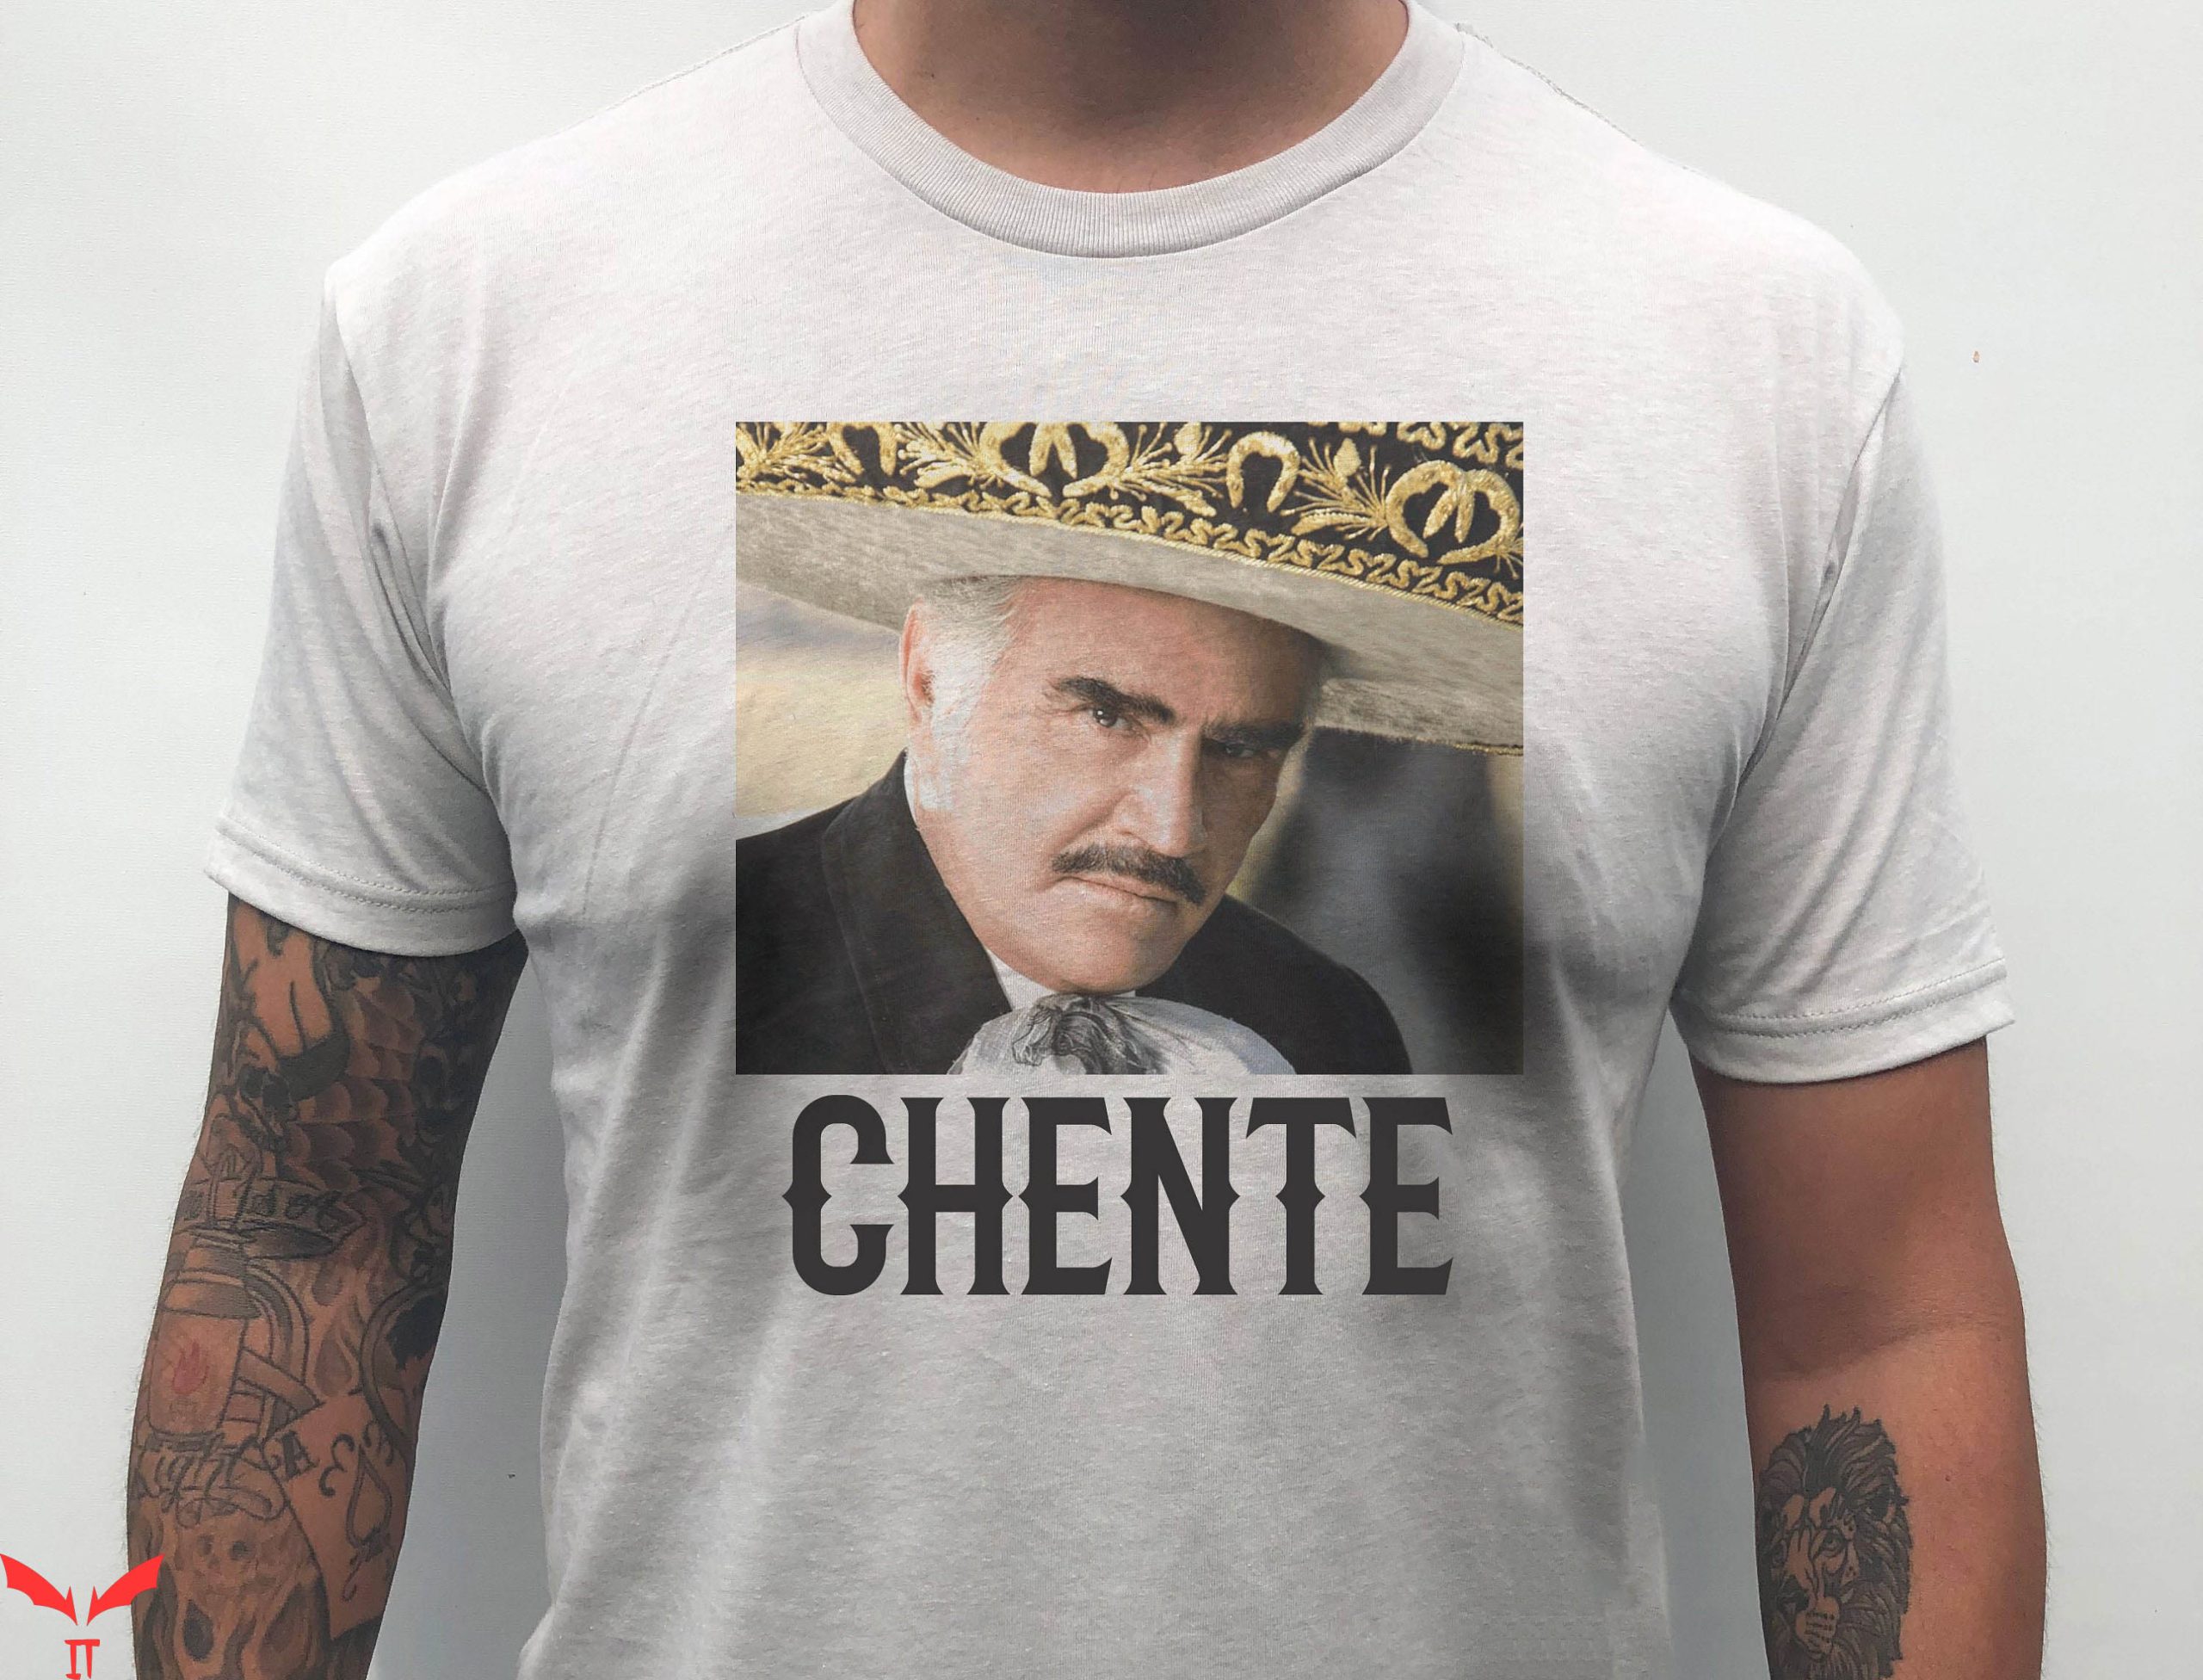 Vicente Fernandez T-Shirt El Rey Trendy Quote Tee Shirt